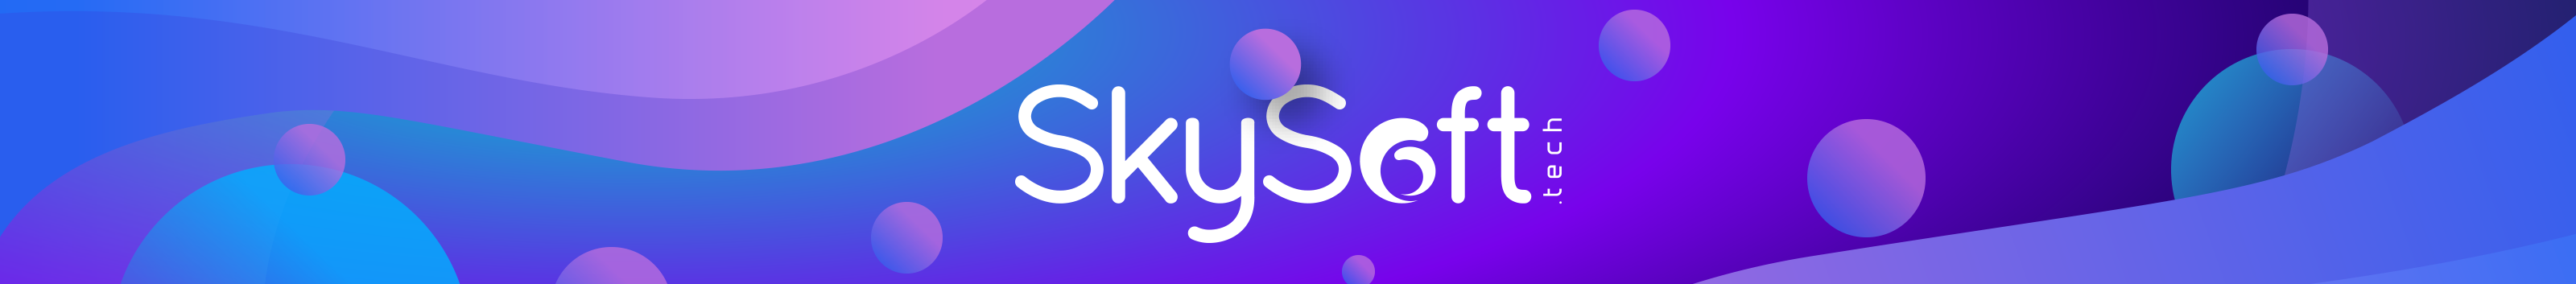 SkySoft. tech's profile banner